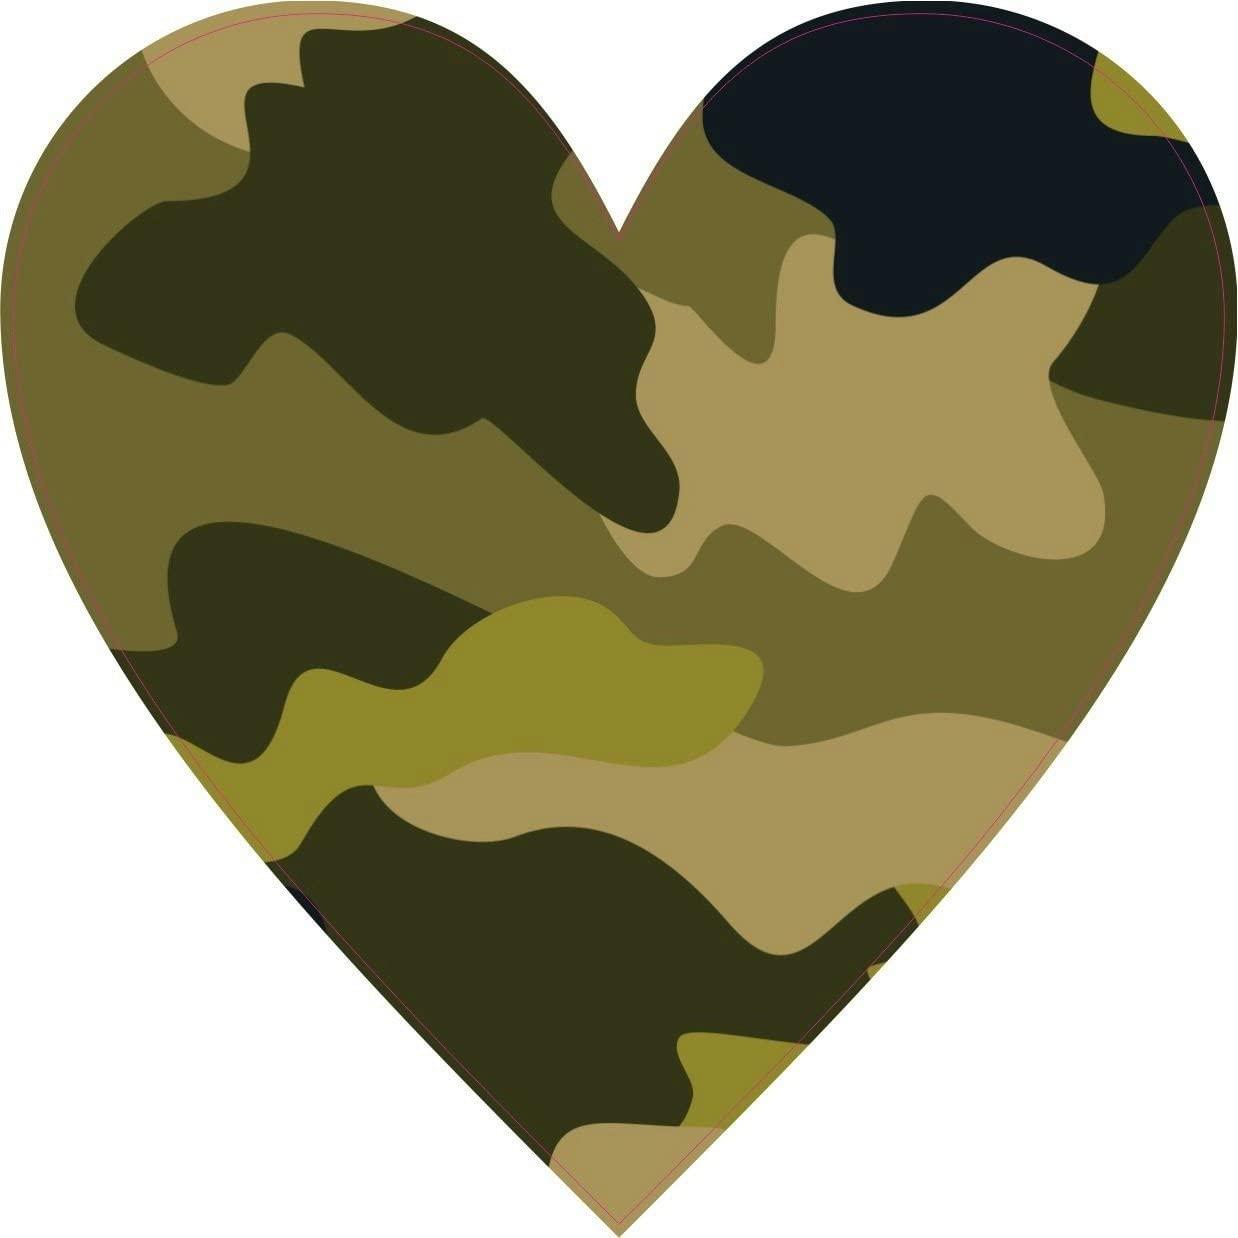 Army heart